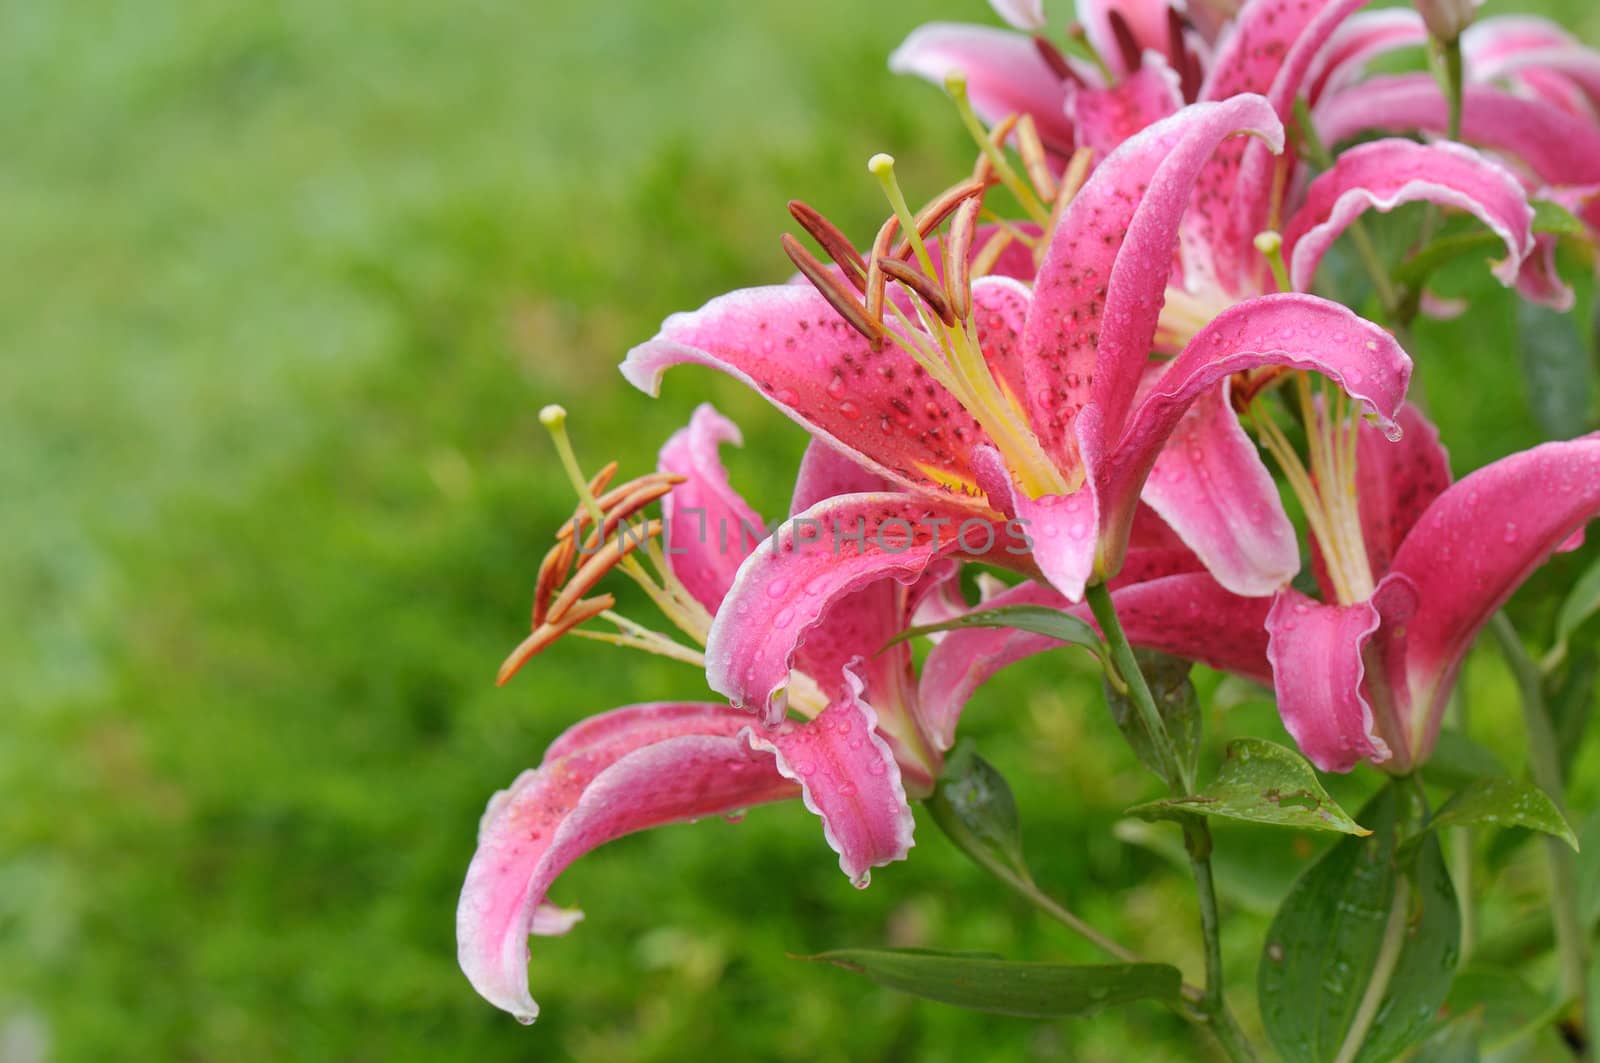 Stargazer lilies with rain drops in the garden